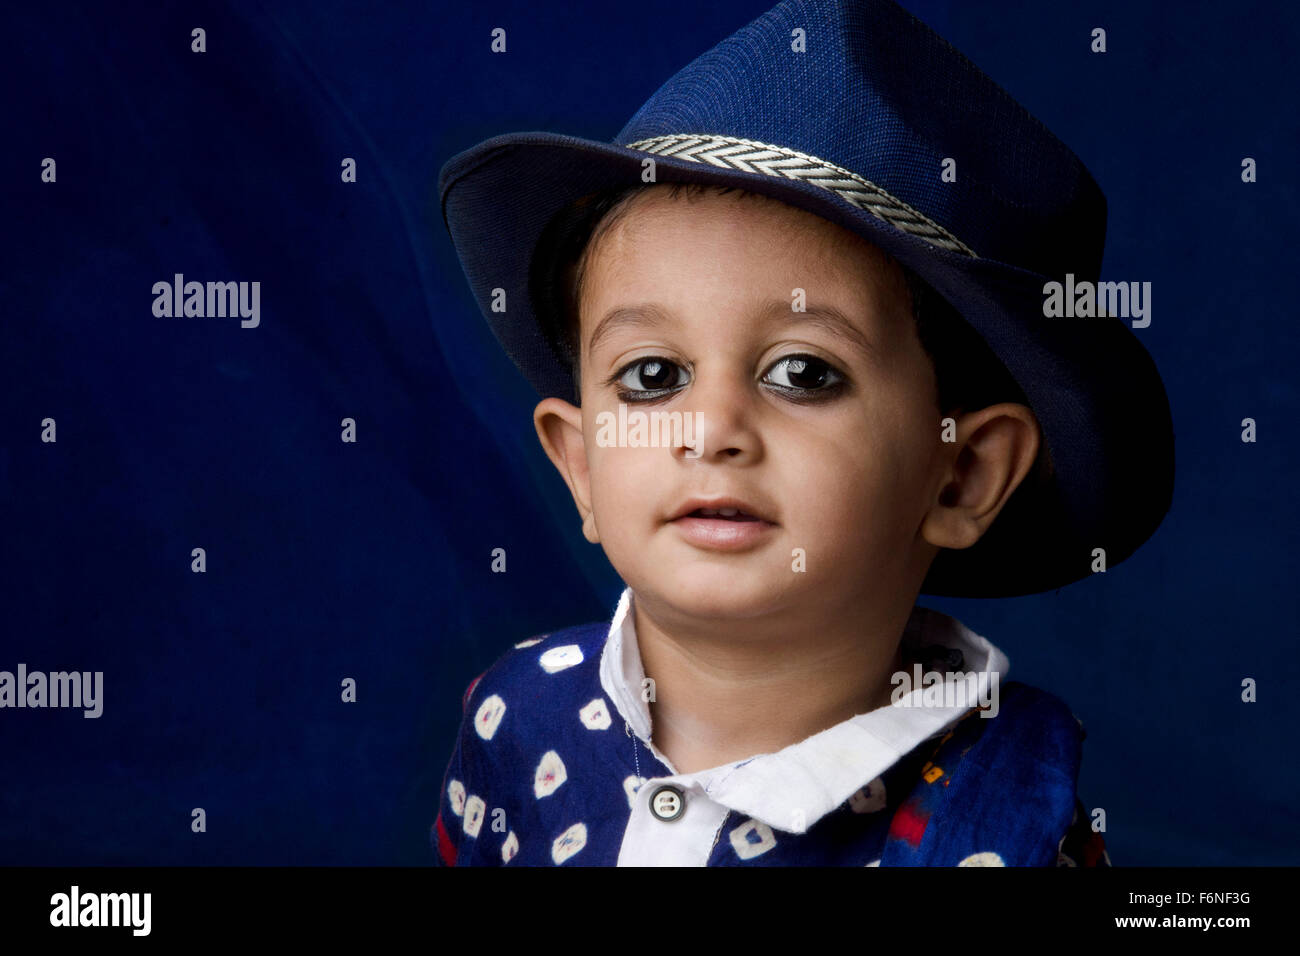 Boy with eye kajal, eye kajol, eye kohl, MR#786 Stock Photo